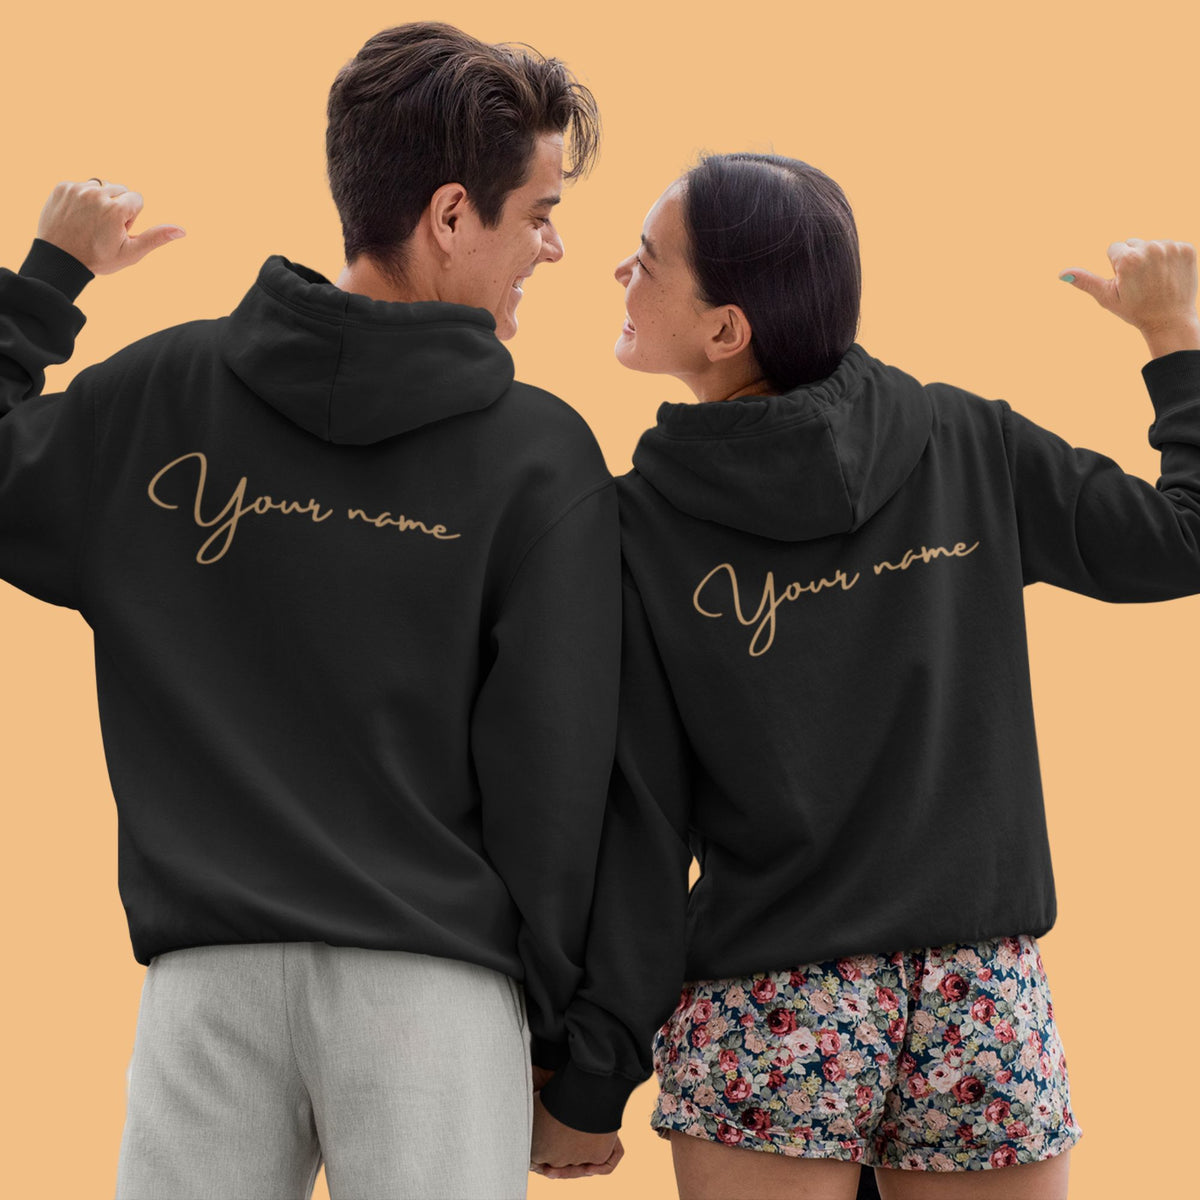 sample-image-names-tobe-printed-on-back-of-black-hooded-sweatshirt-for-couple-gogirgit #color_black